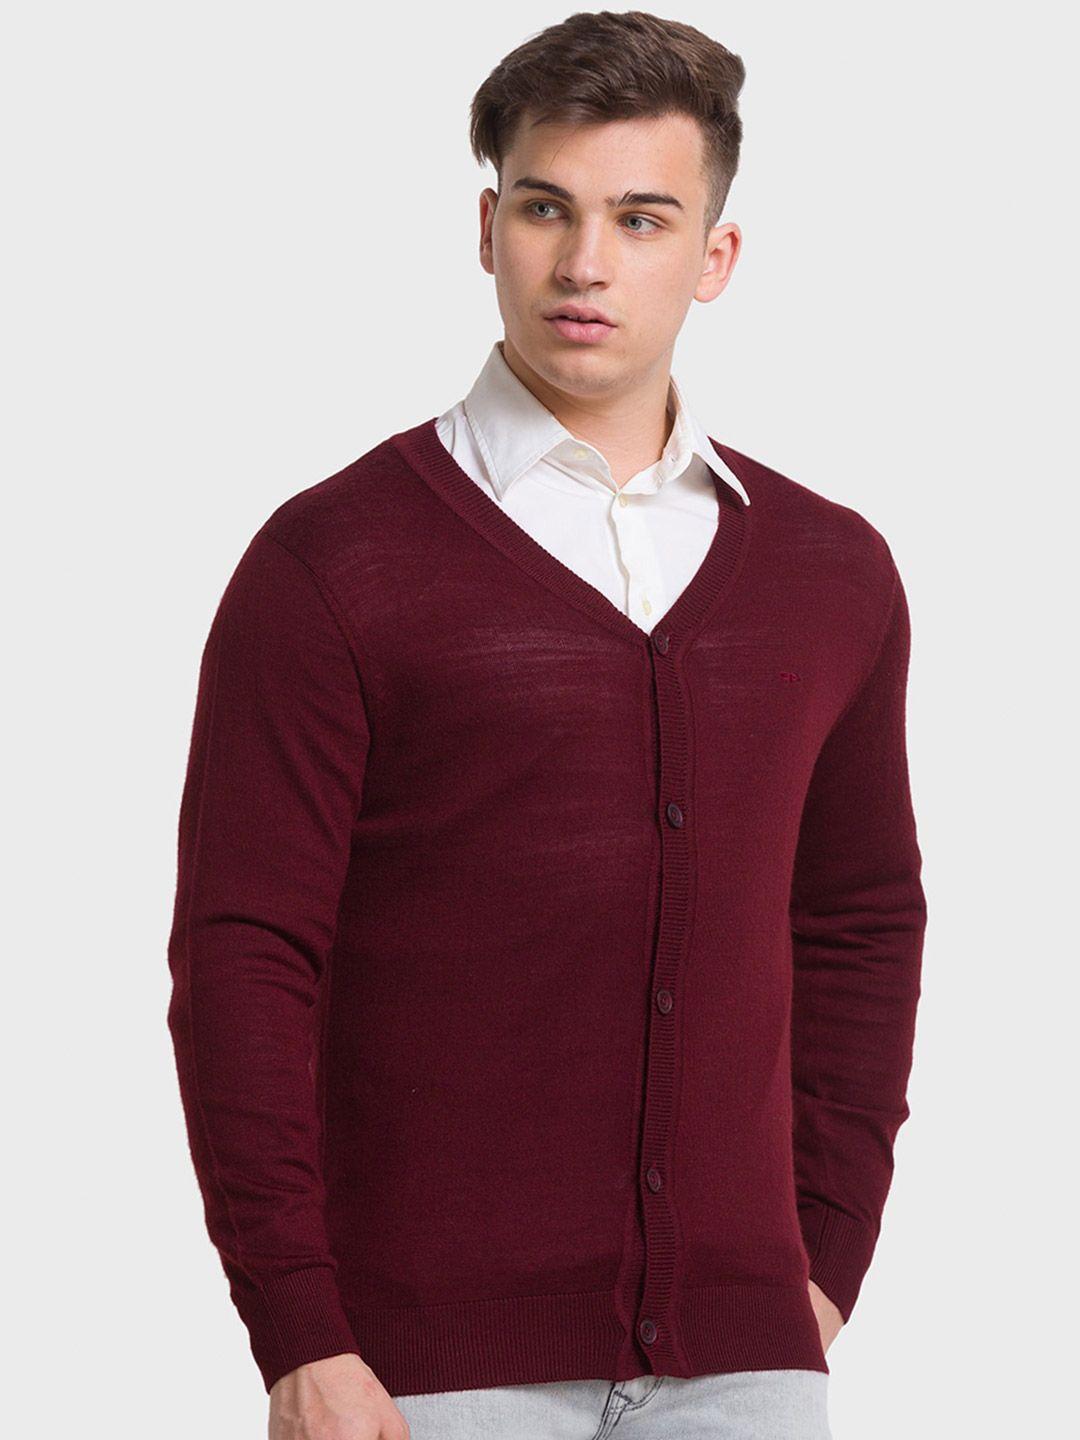 colorplus-men-plus-size-v-neck-cardigan-sweater